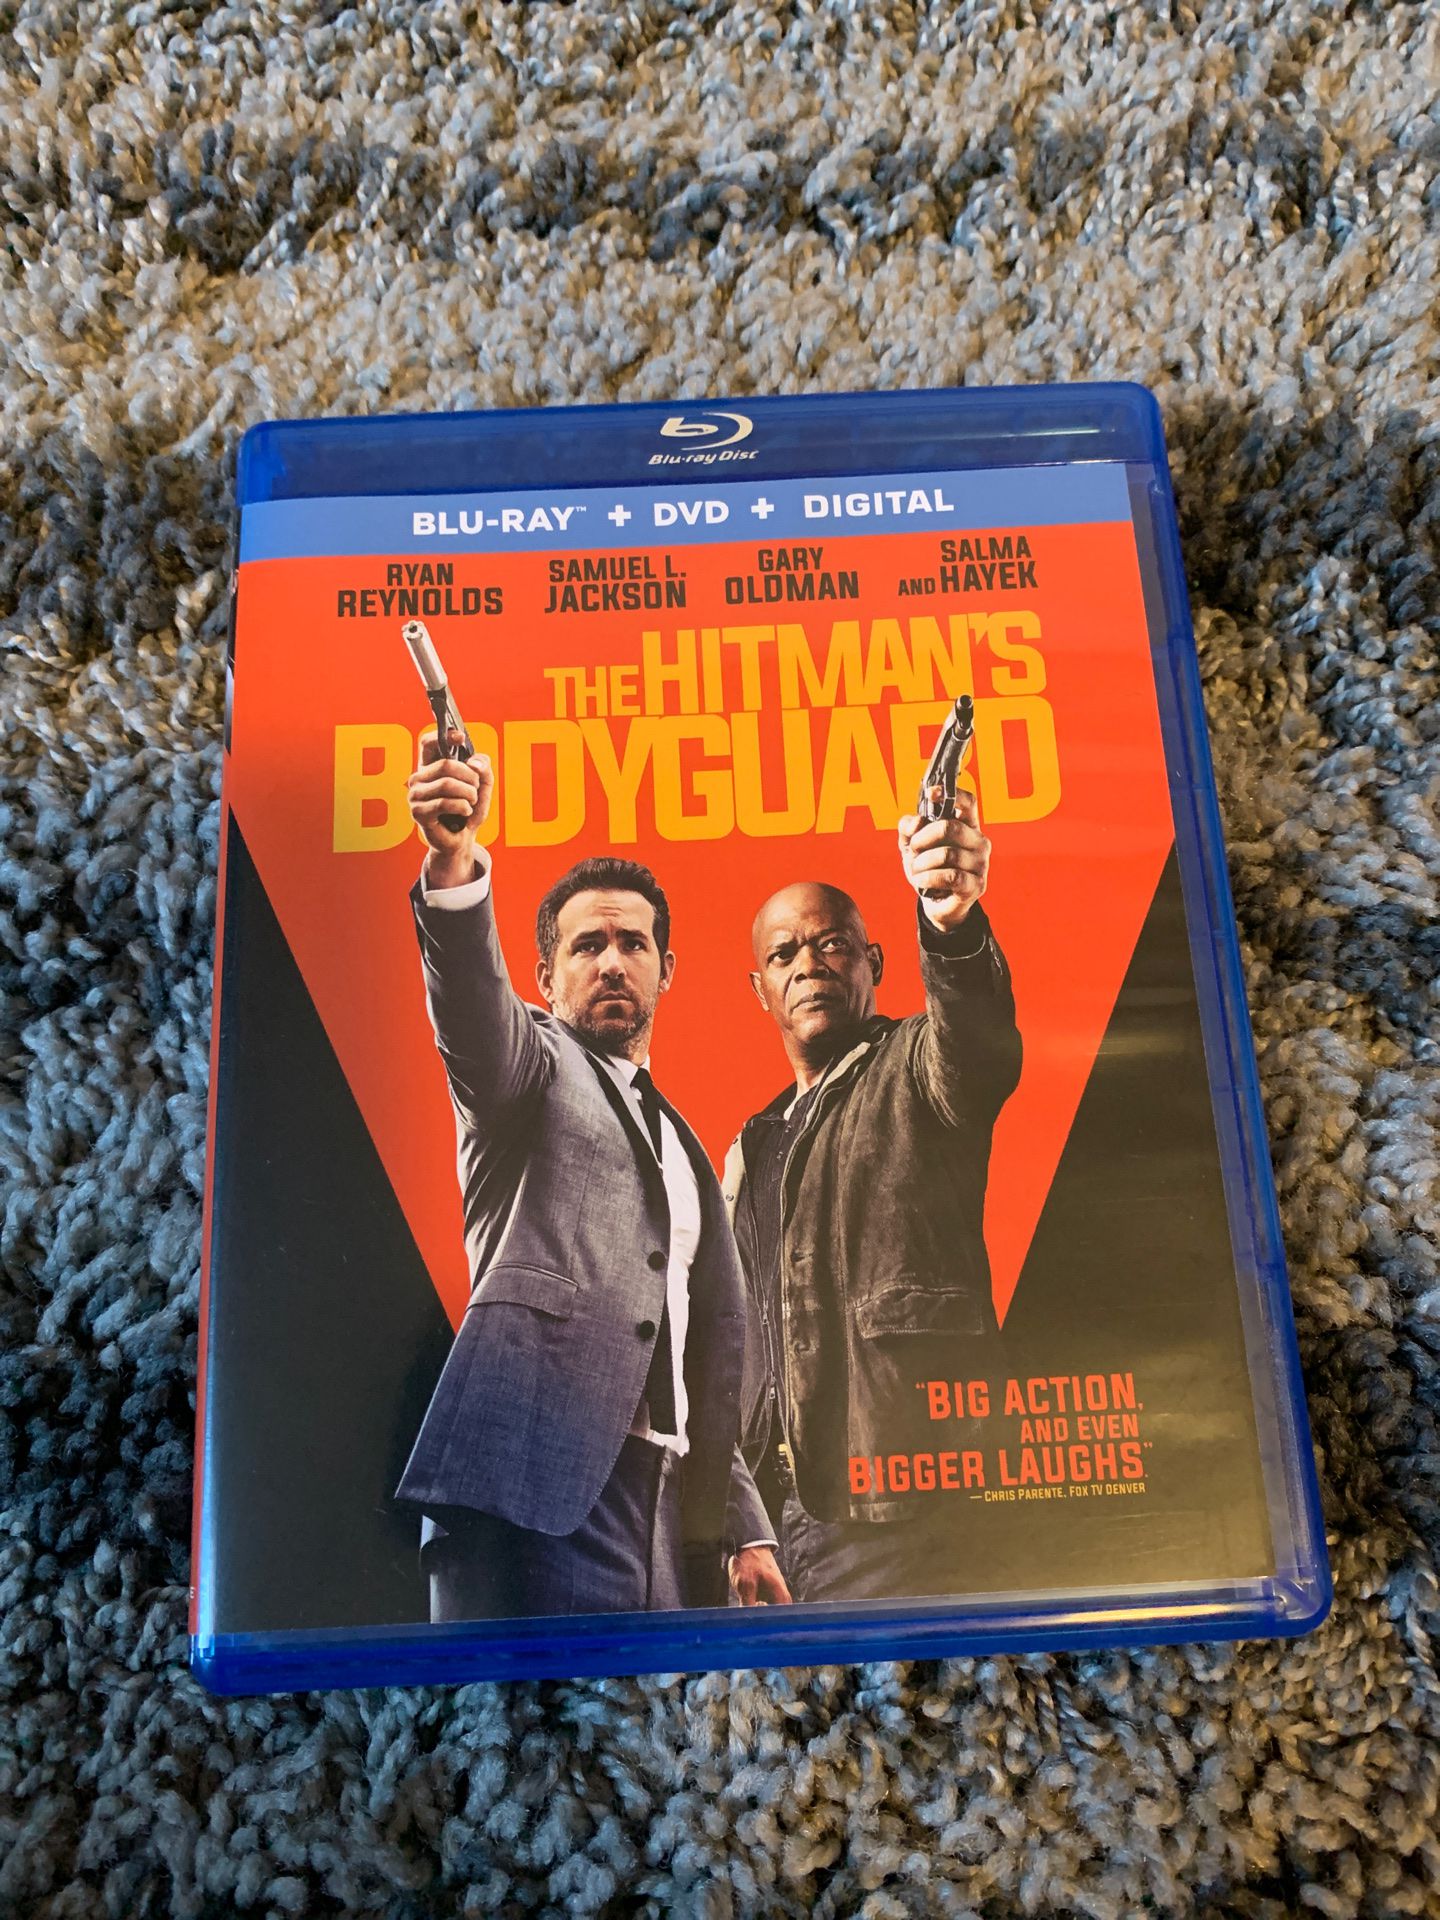 The hitmans bodyguard Blu-ray